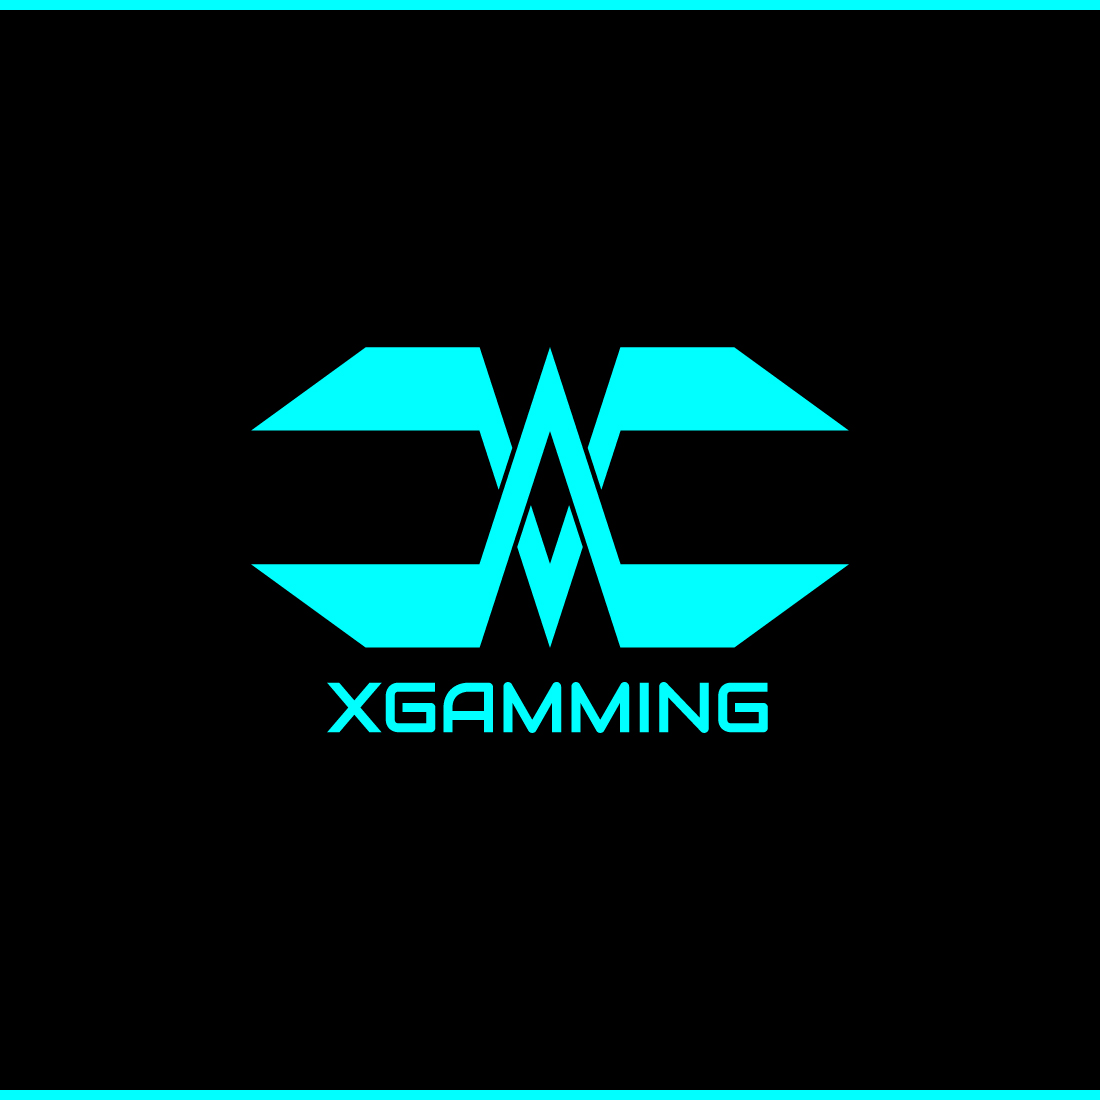 Minimalist Gamming Logo cover image.